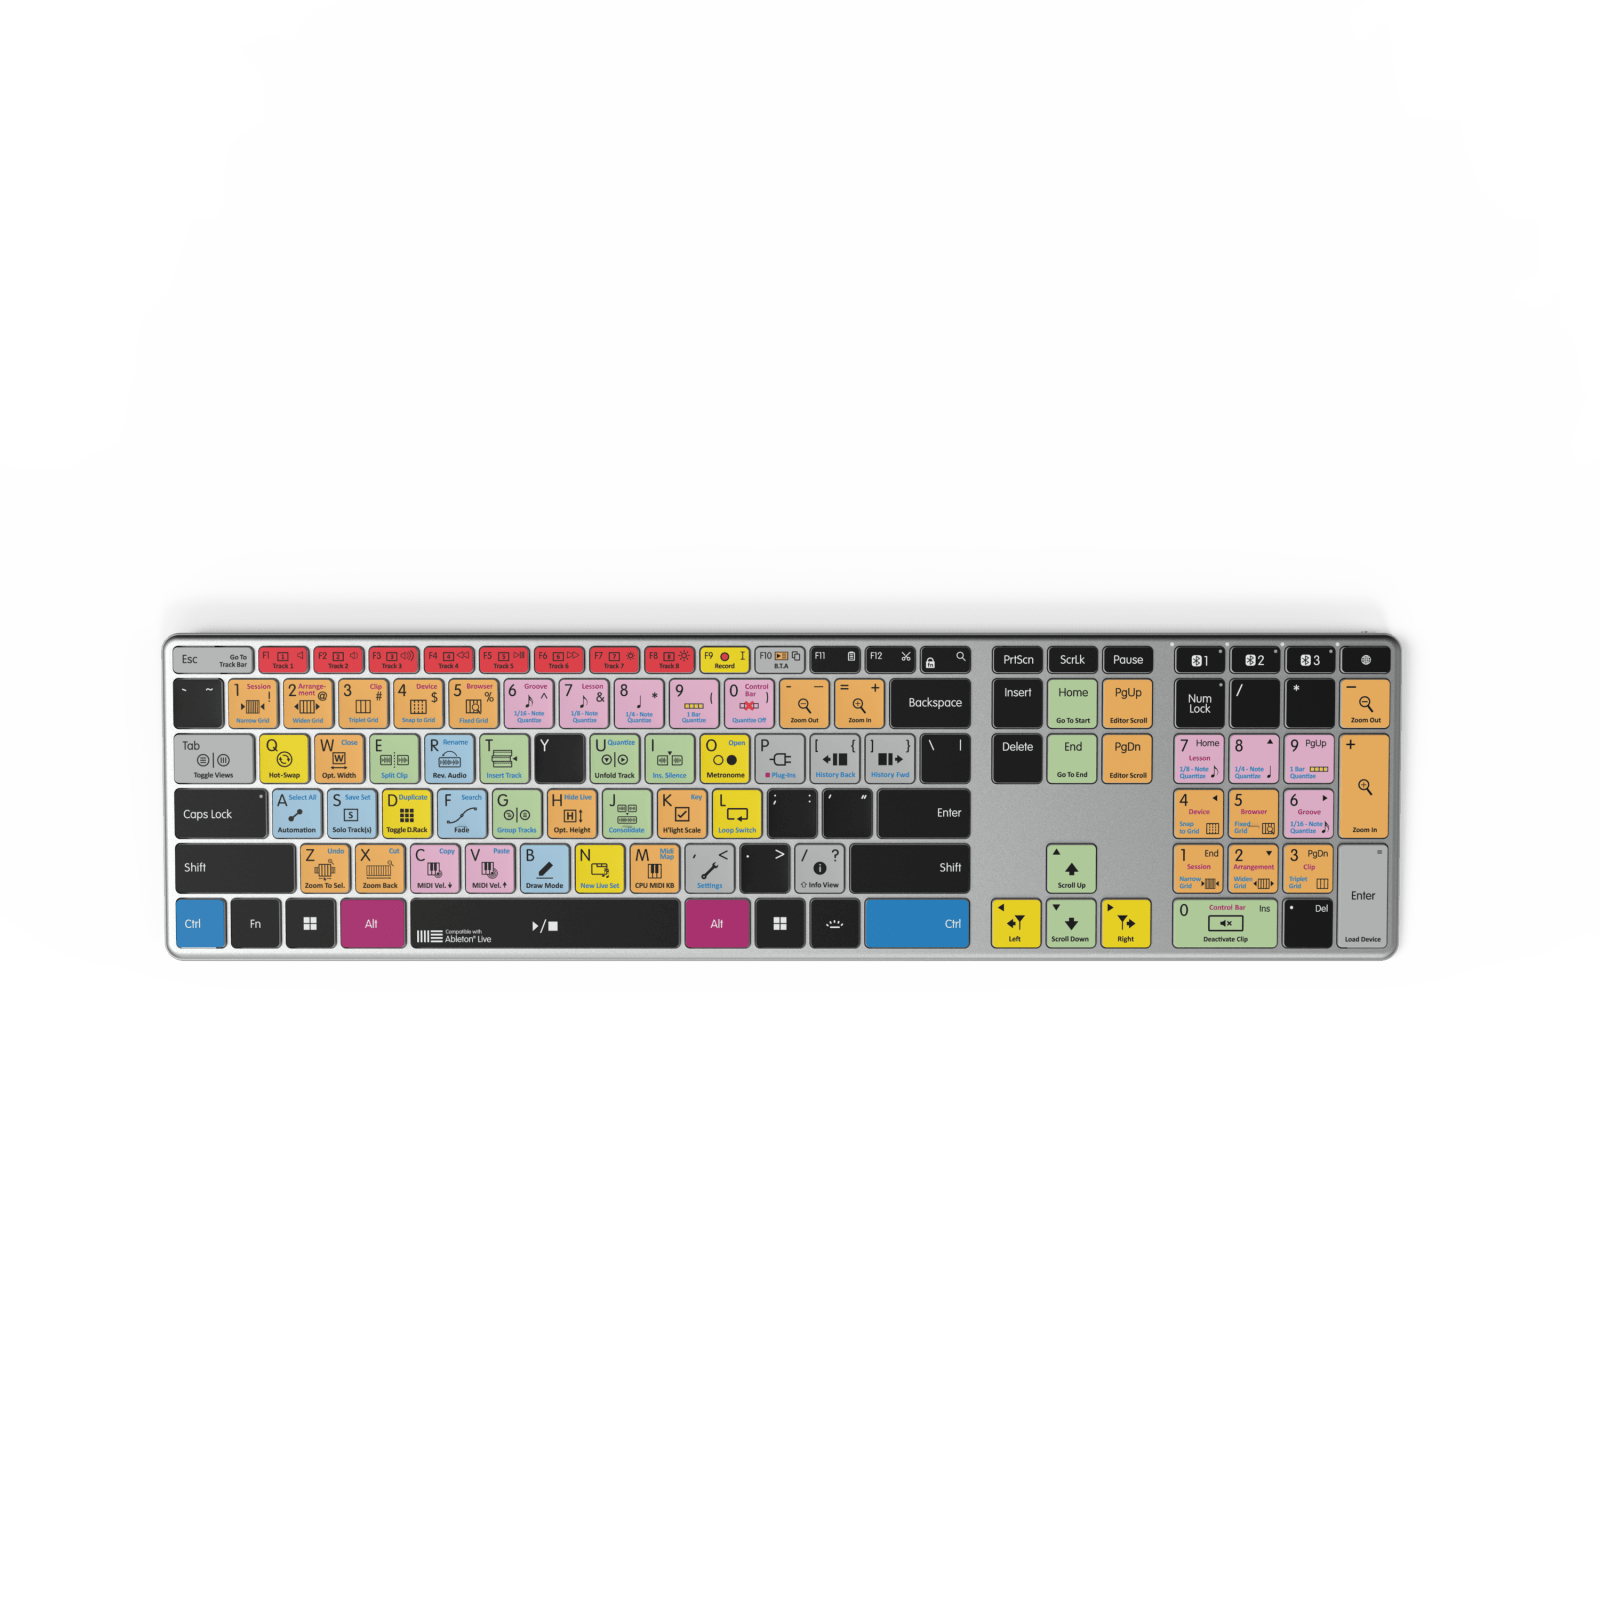 NEW Ableton Live Keyboard | Backlit & Wireless | Windows USA Layout